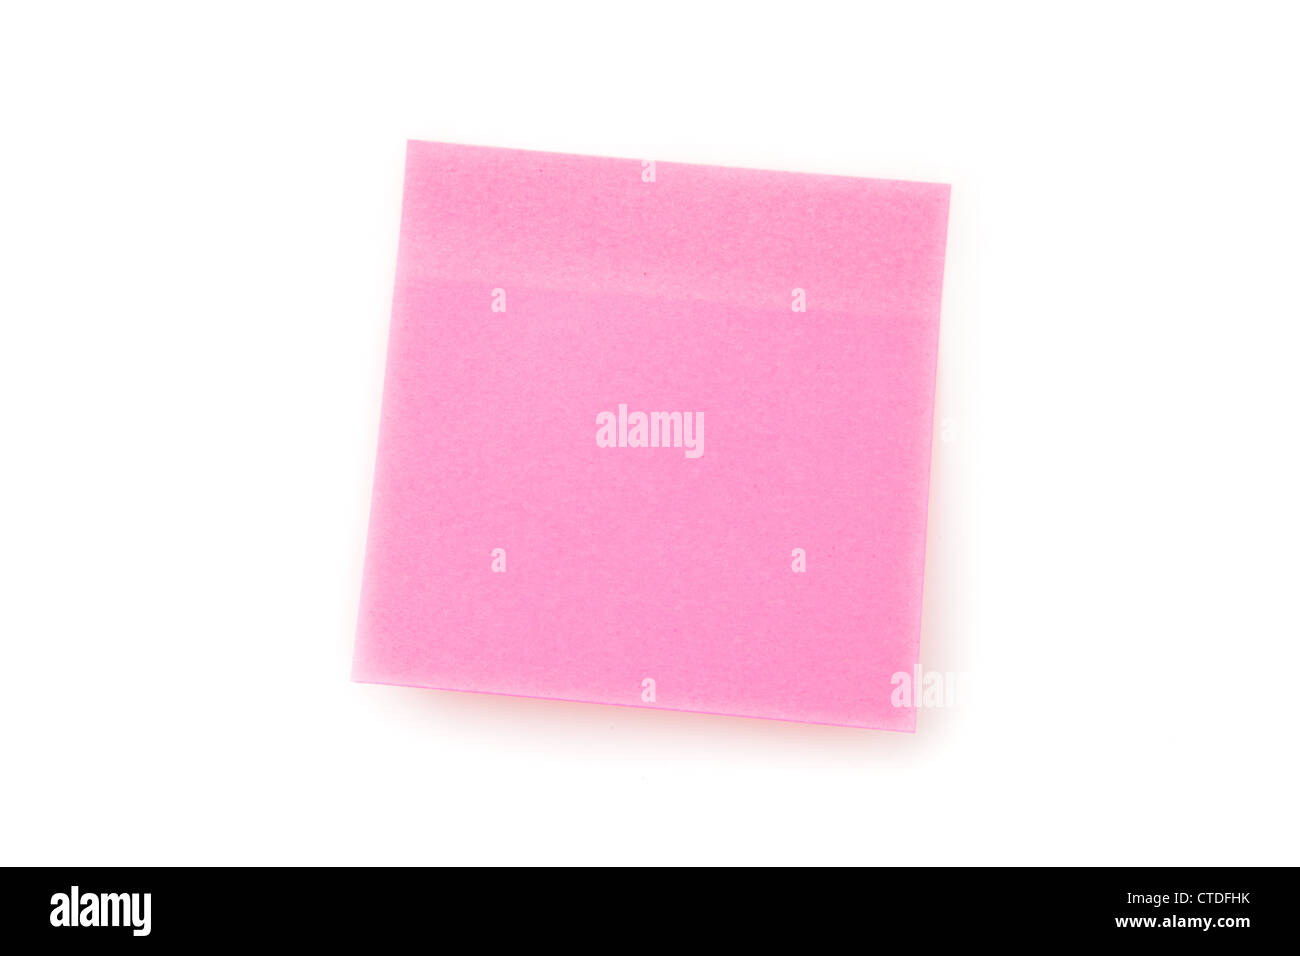 Pink adhesive note Stock Photo